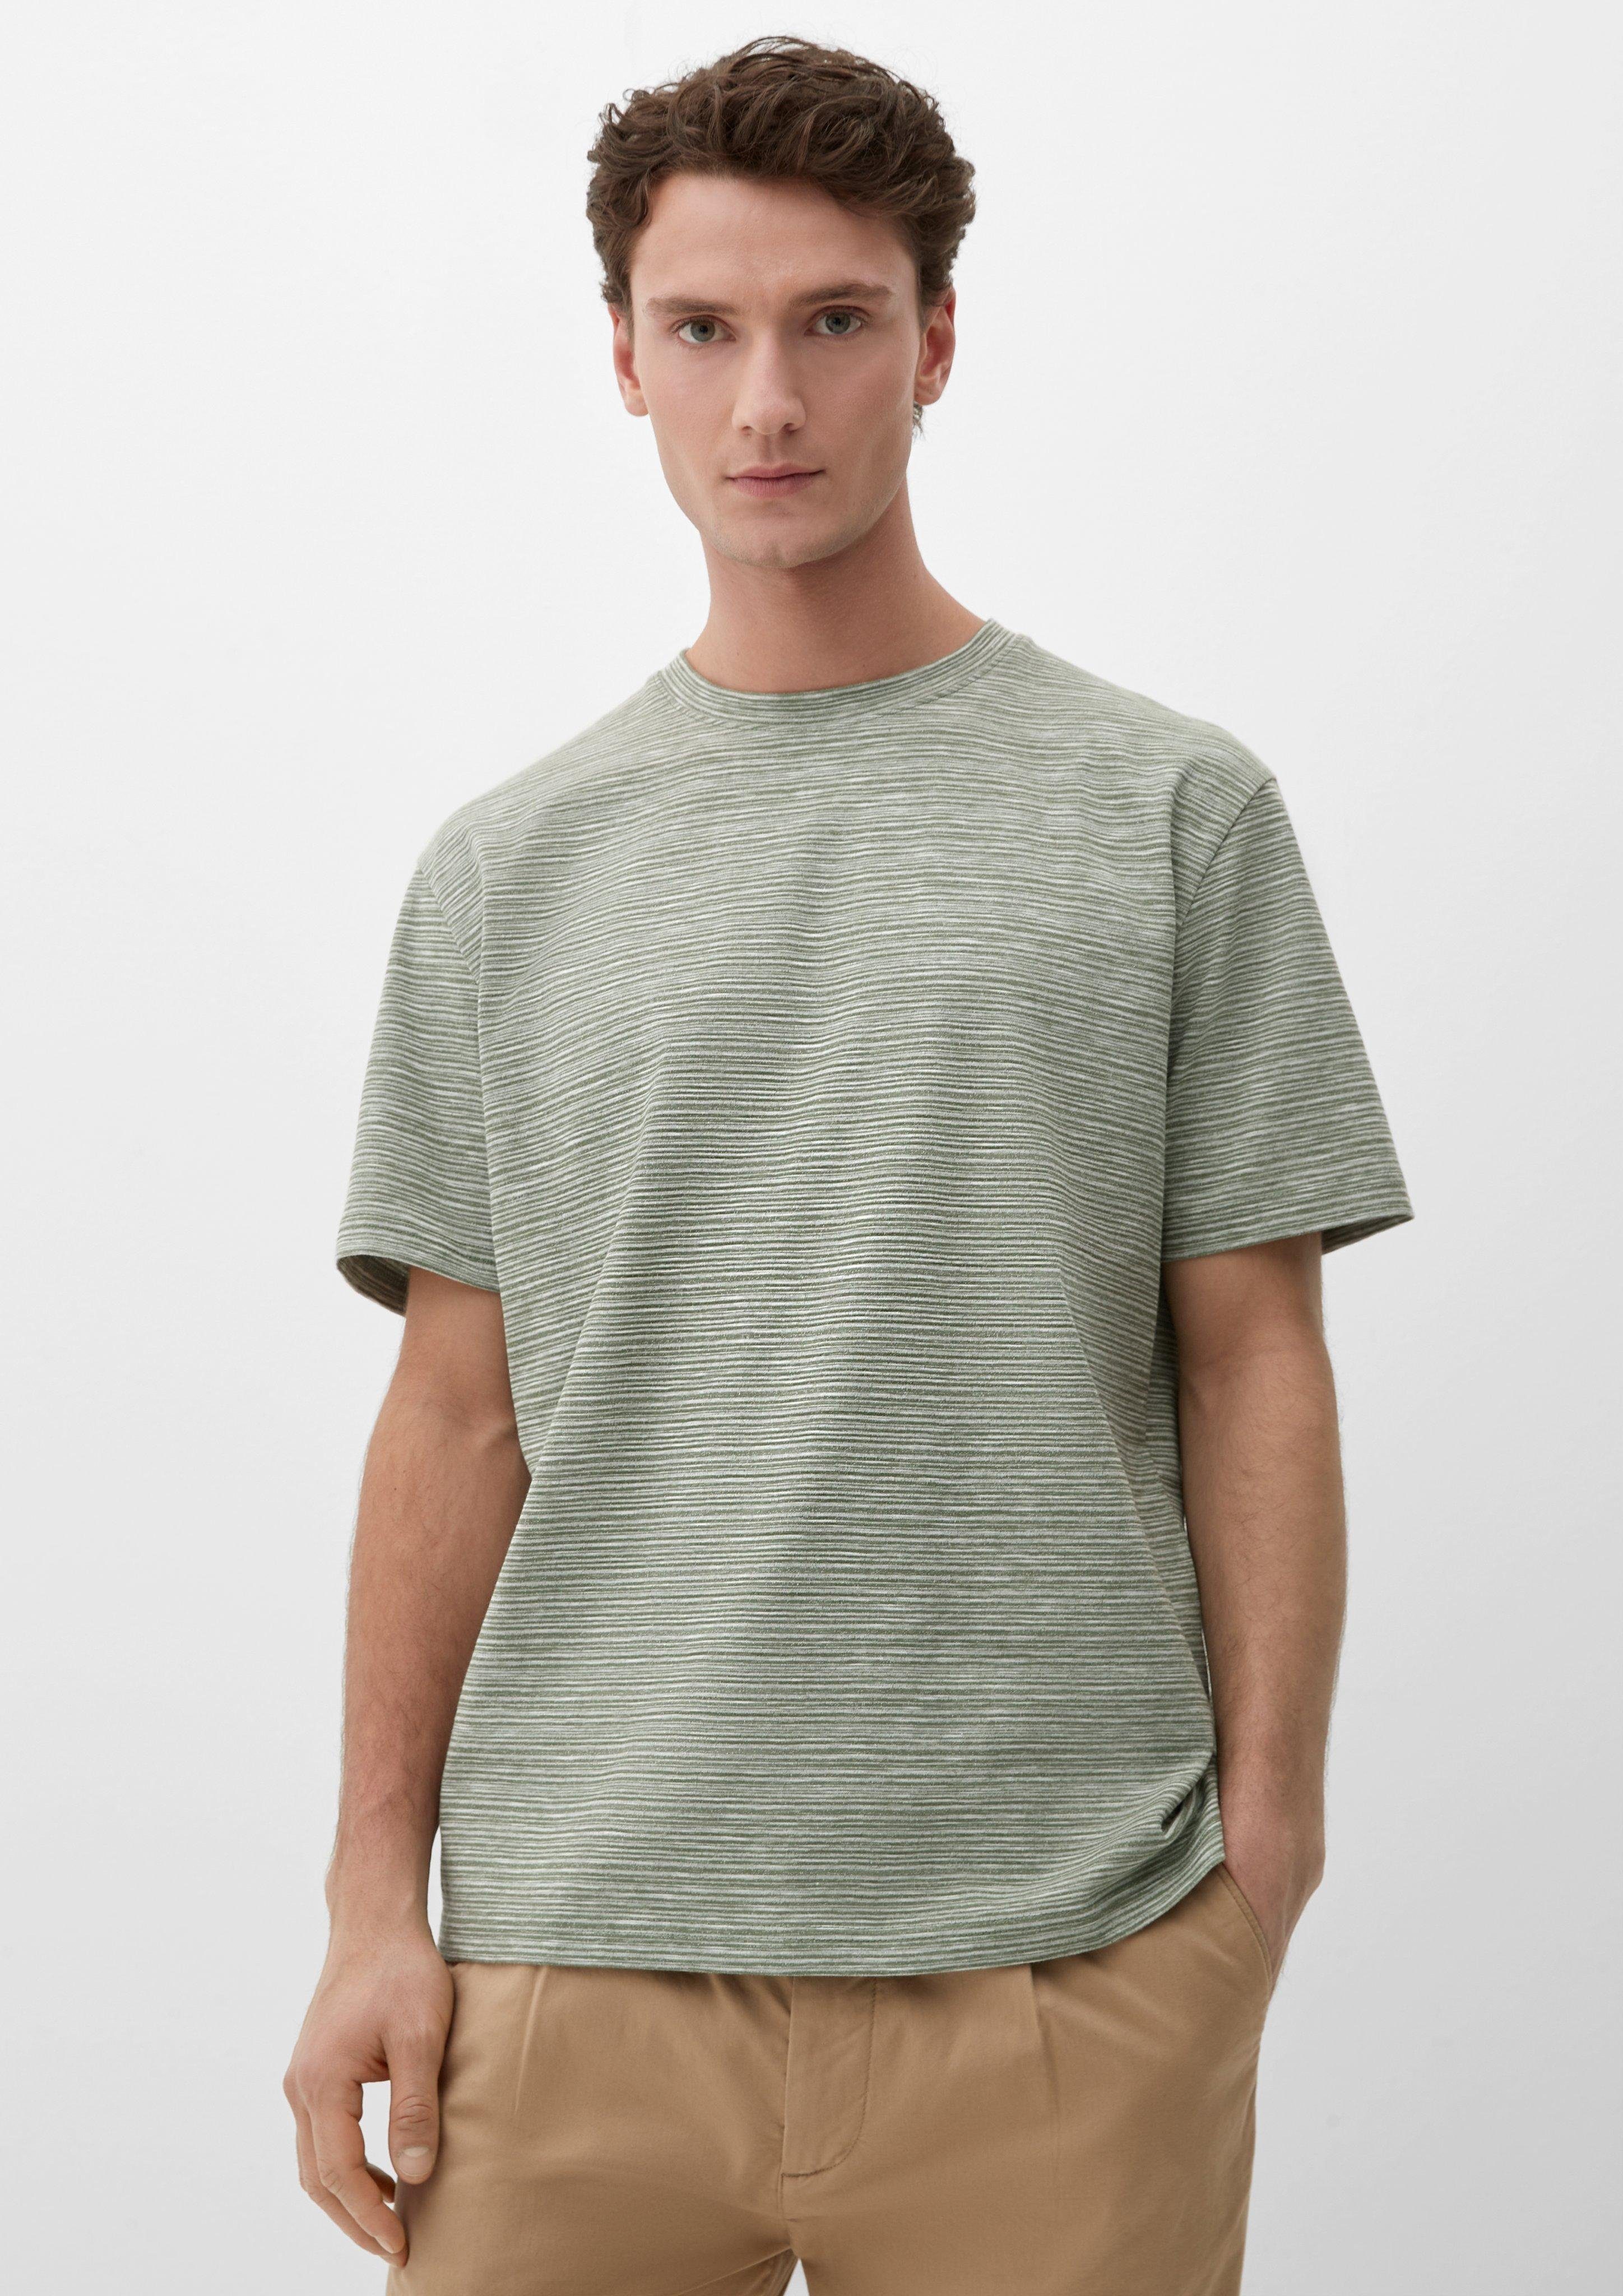 s.Oliver Kurzarmshirt helles T-Shirt aus Blende olivgrün Flammgarn-Jersey